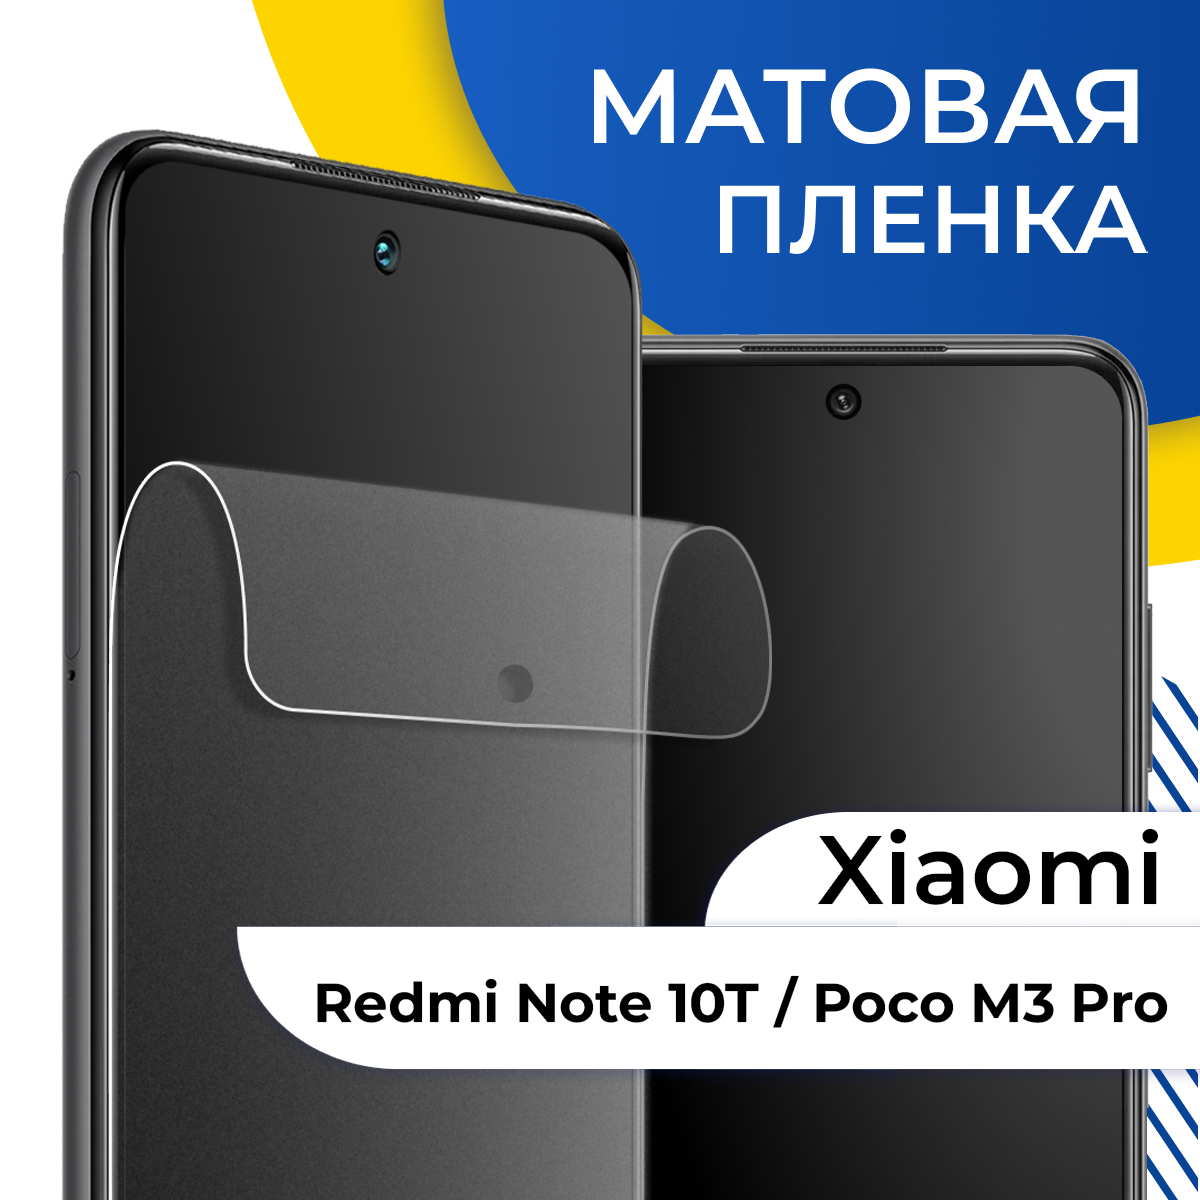 Комплект 2 шт. Матовая гидрогелевая пленка для телефона Xiaomi Redmi Note 10T и Poco M3 Pro / Самовосстанавливающаяся пленка на Сяоми Редми Нот 10Т и Поко М3 Про